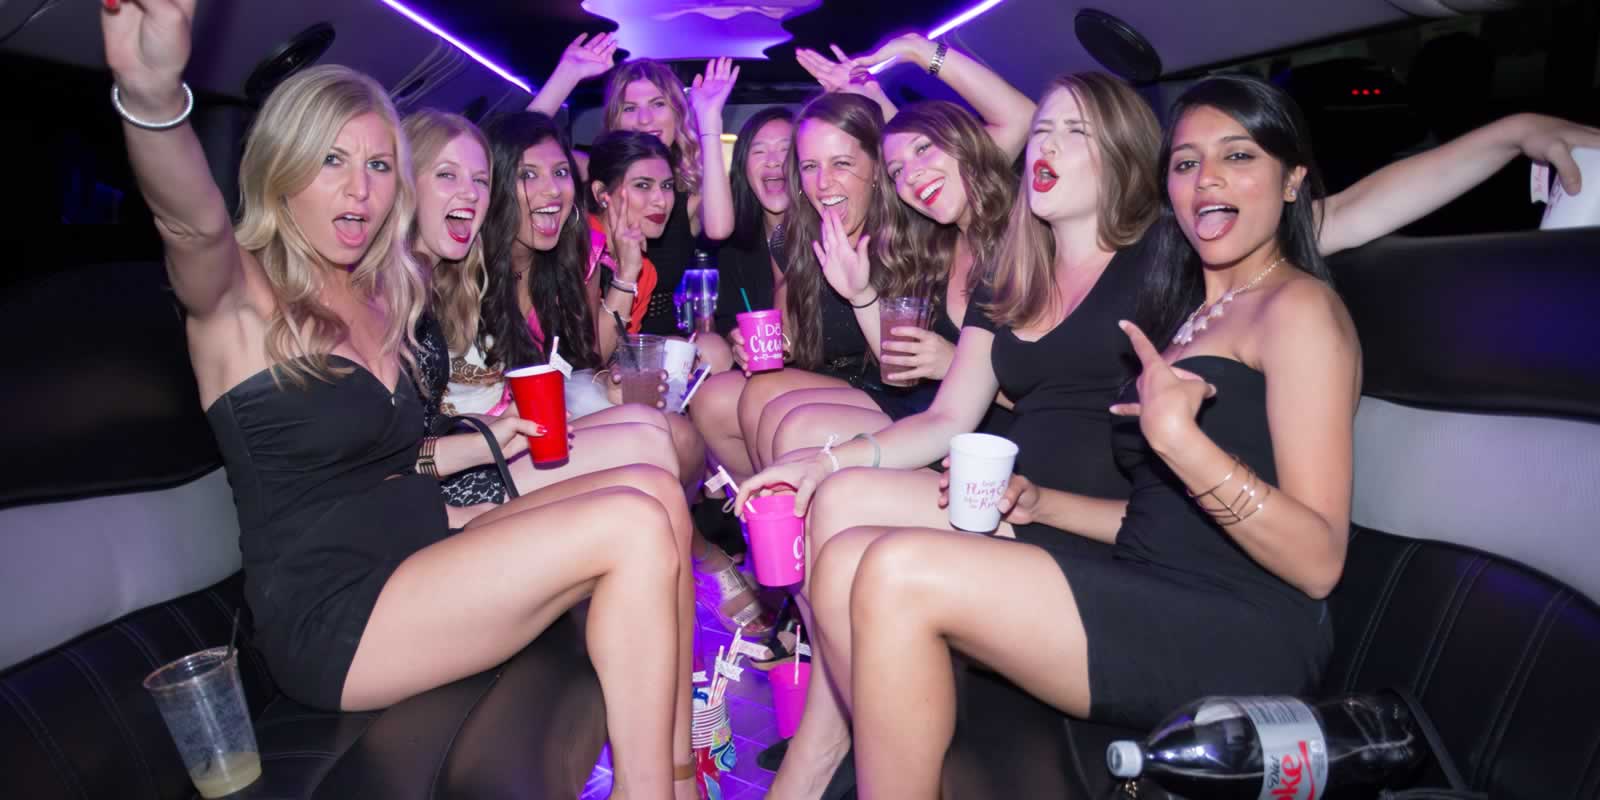 Girls celebrate birthday in limo